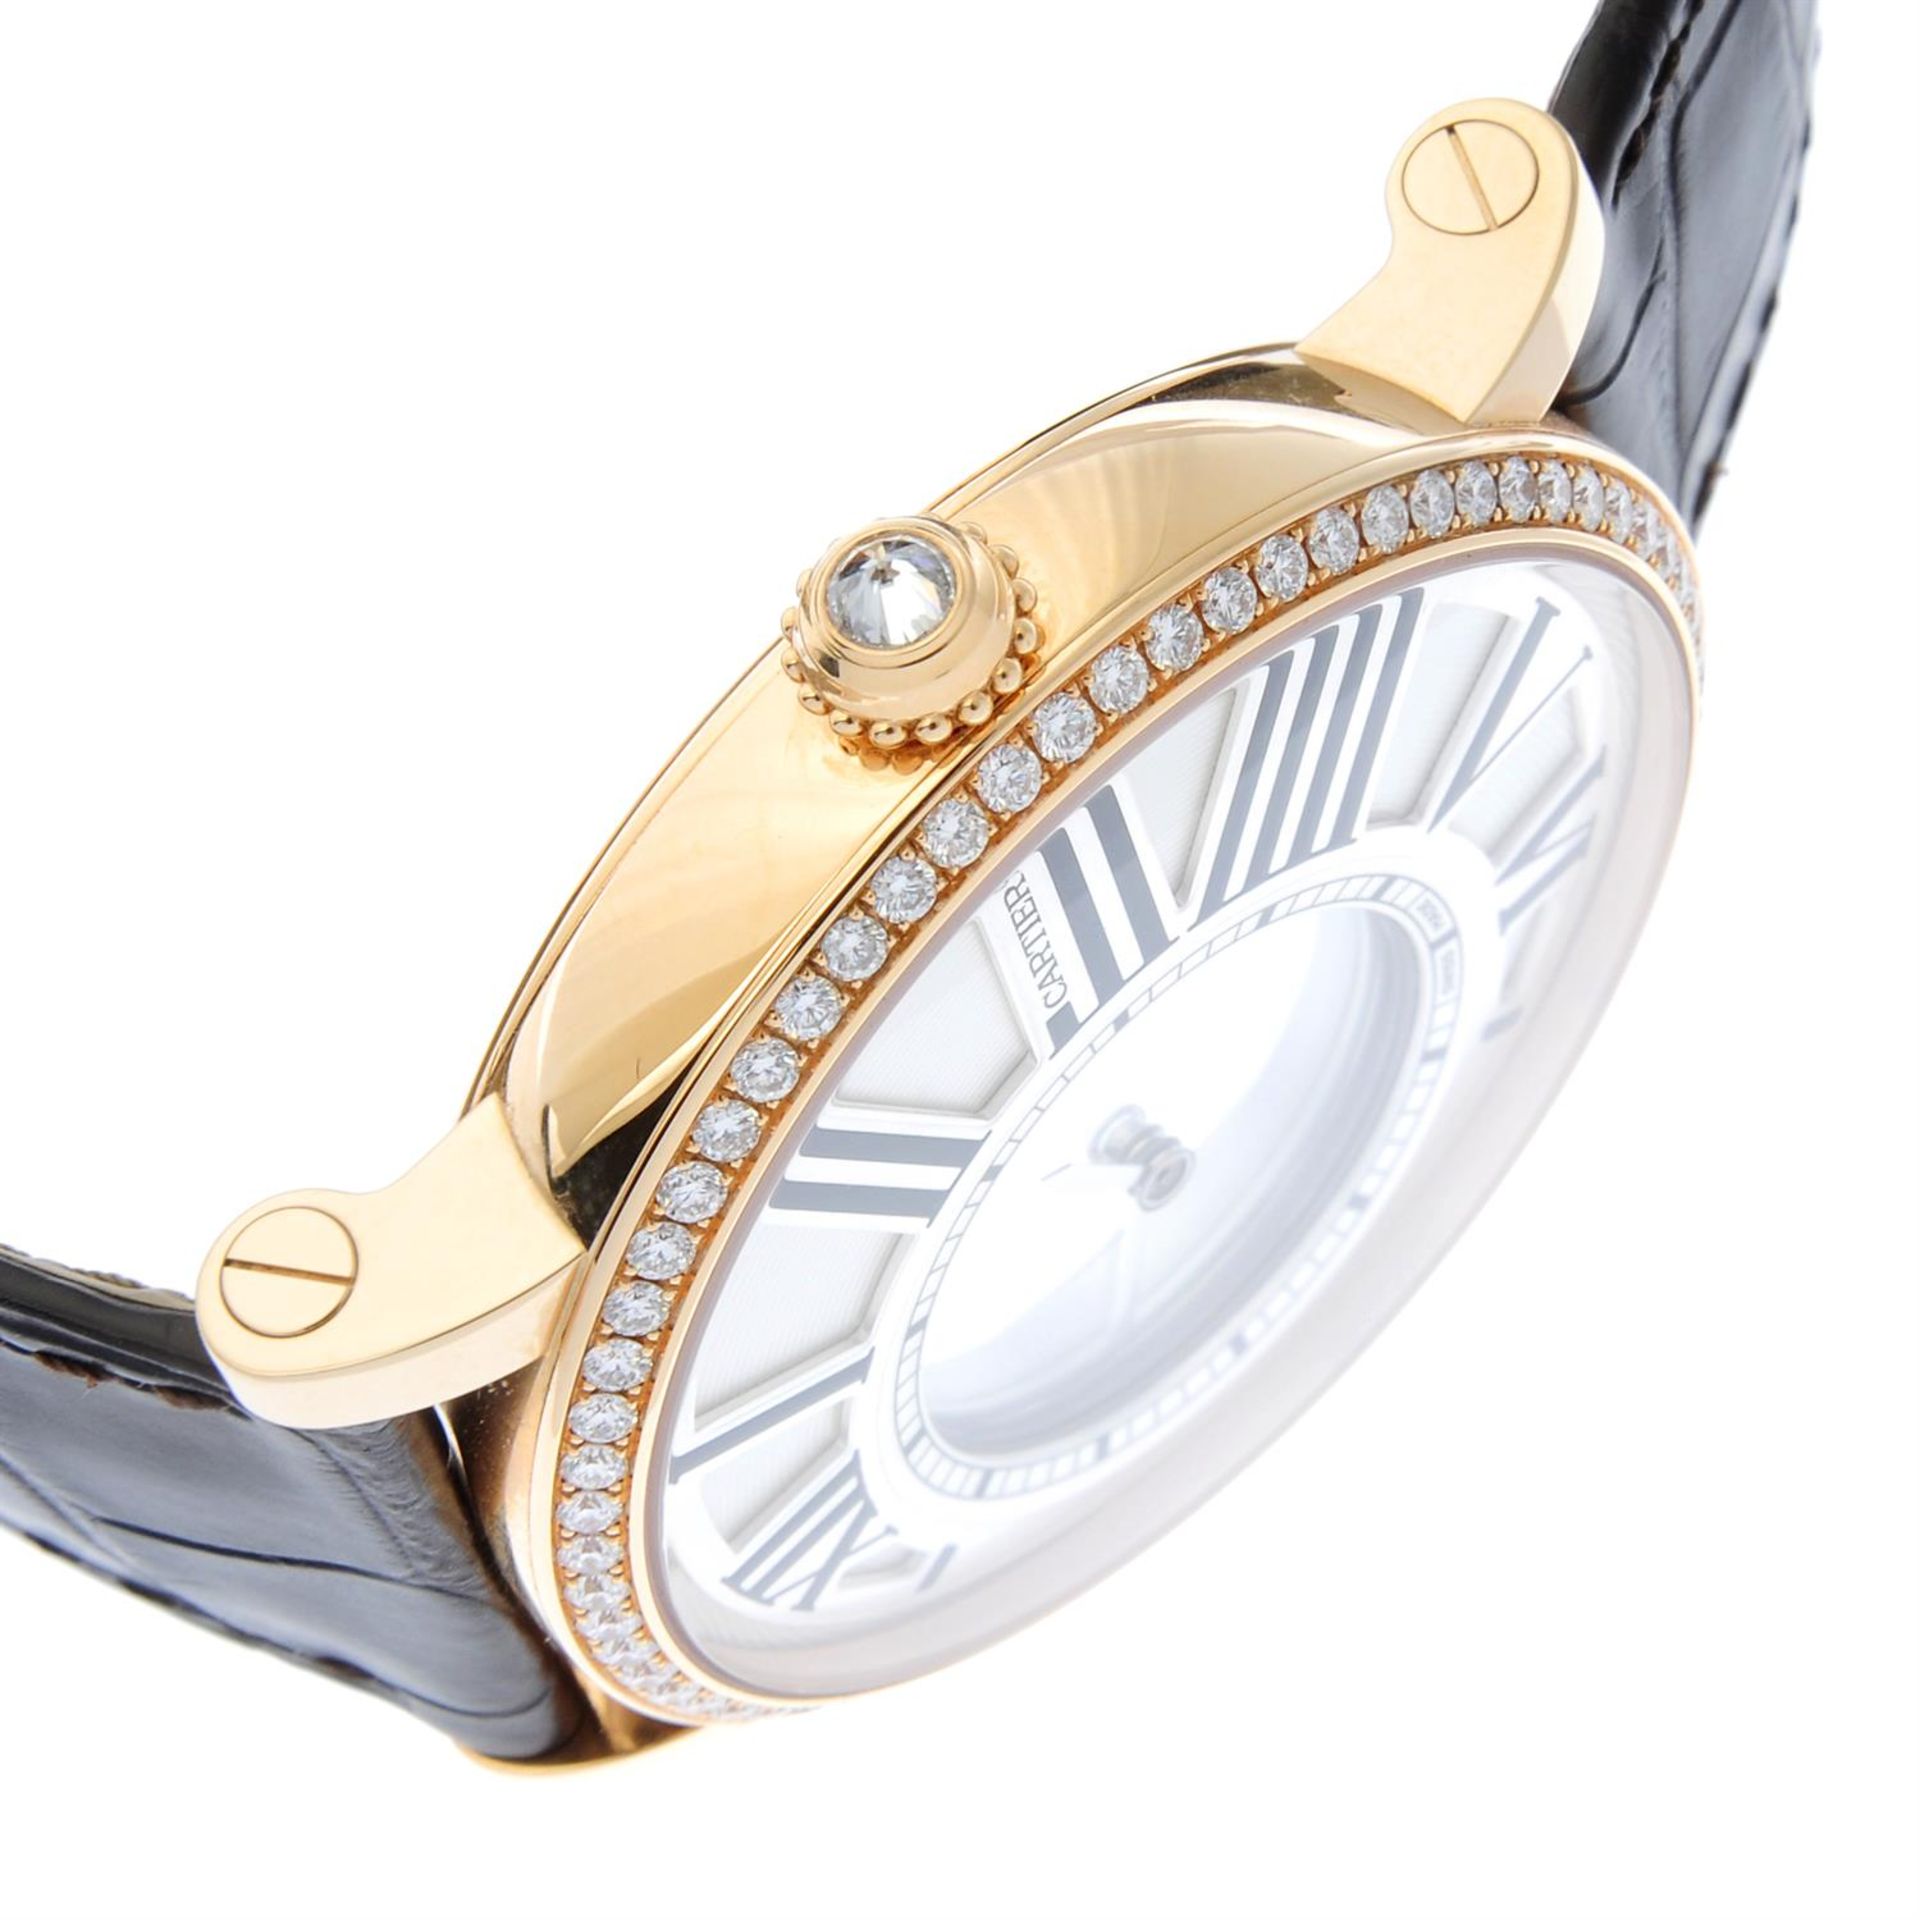 CARTIER - an 18ct rose gold Rotonde de Cartier Mystérieuse wrist watch, 42mm. - Image 3 of 7